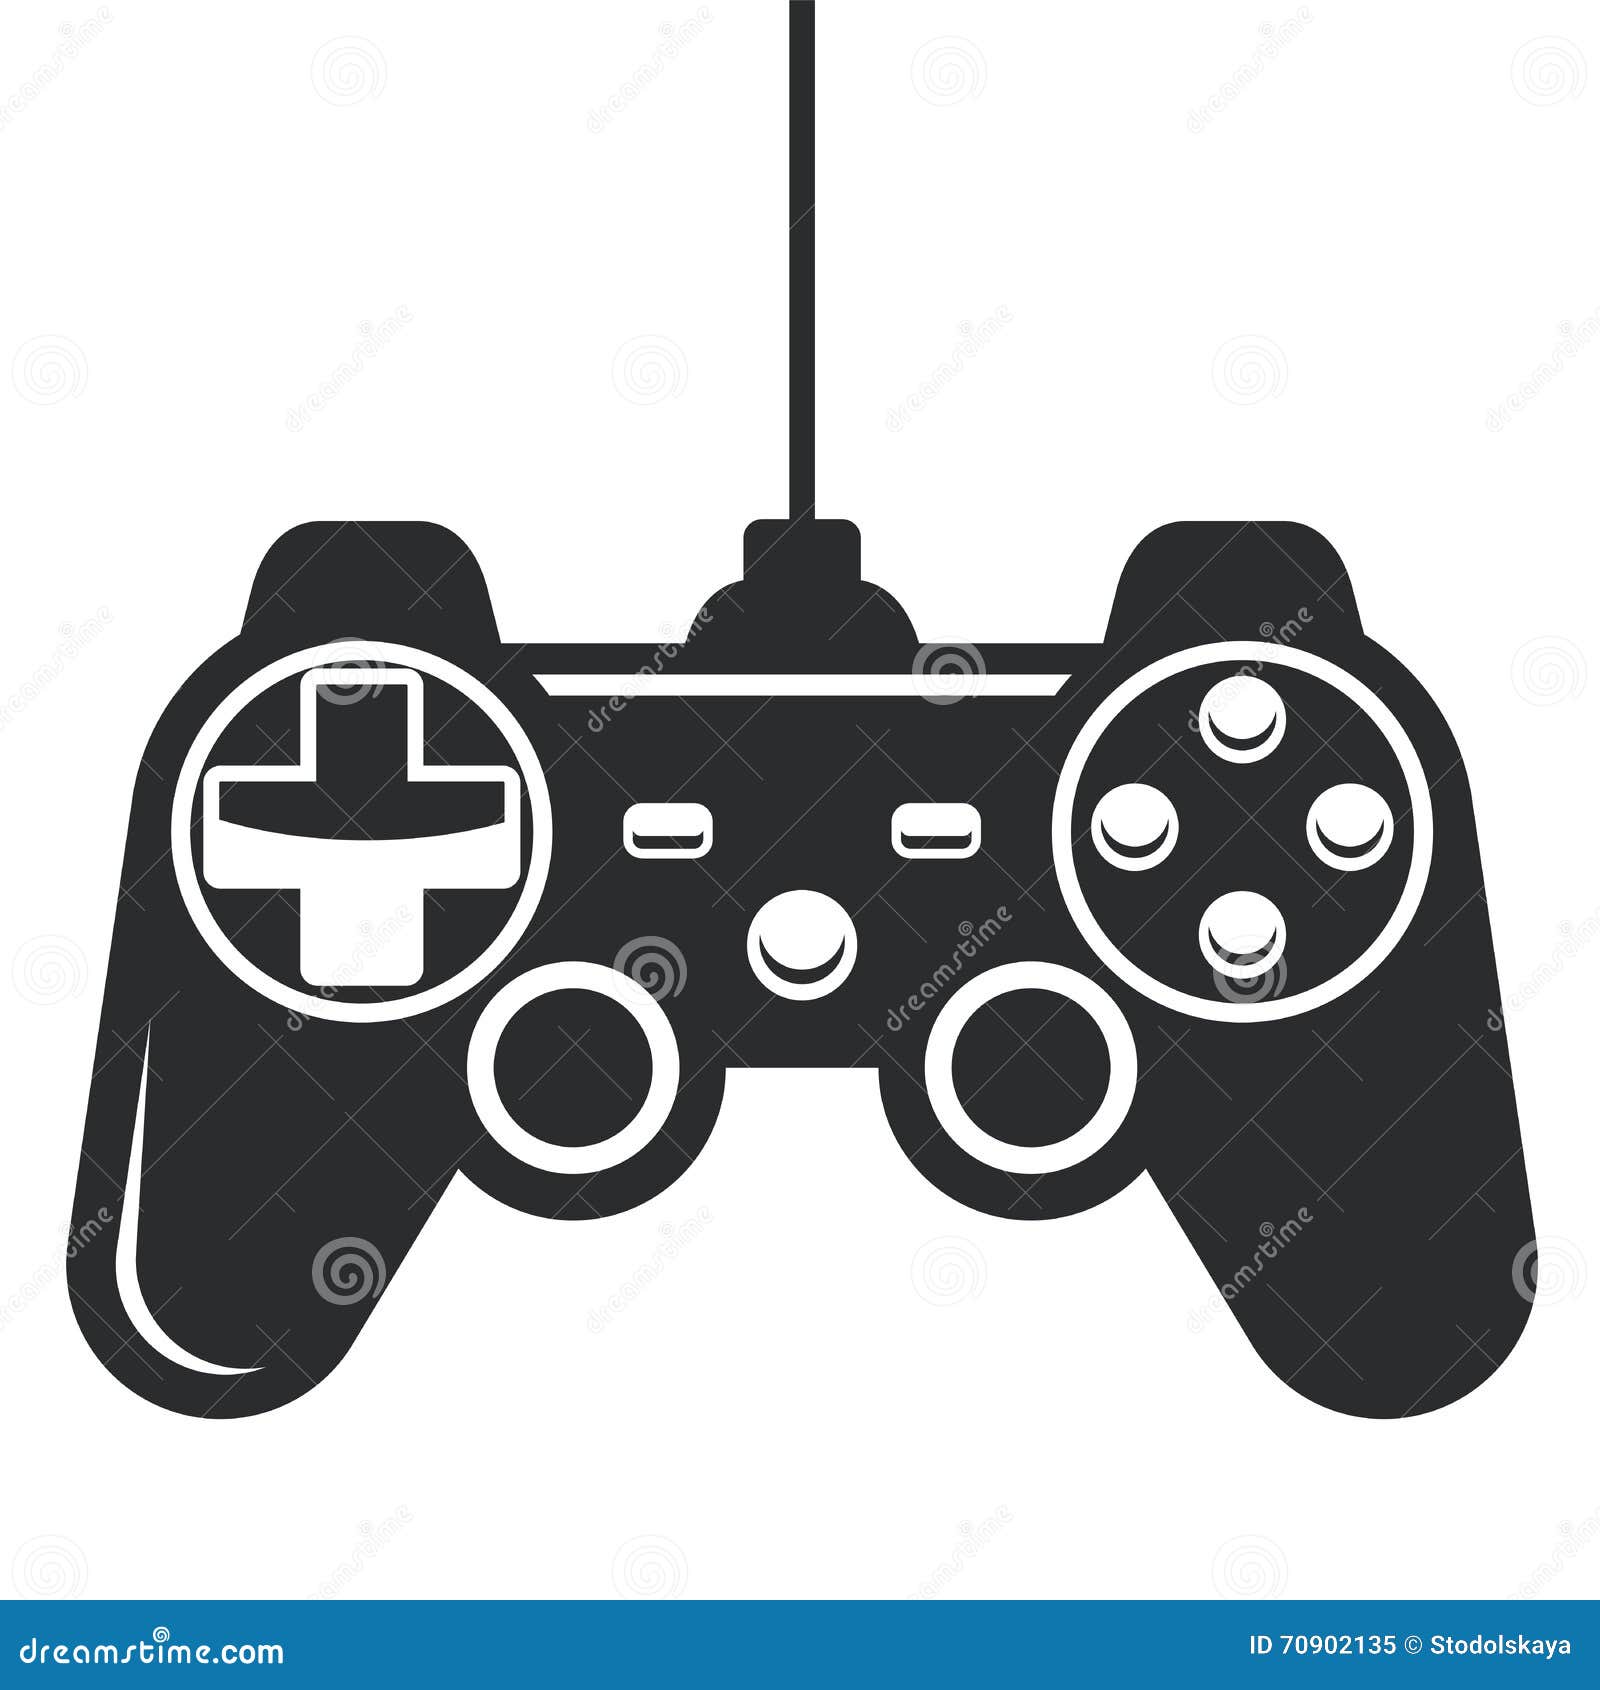 gamepad icon - game console joystick